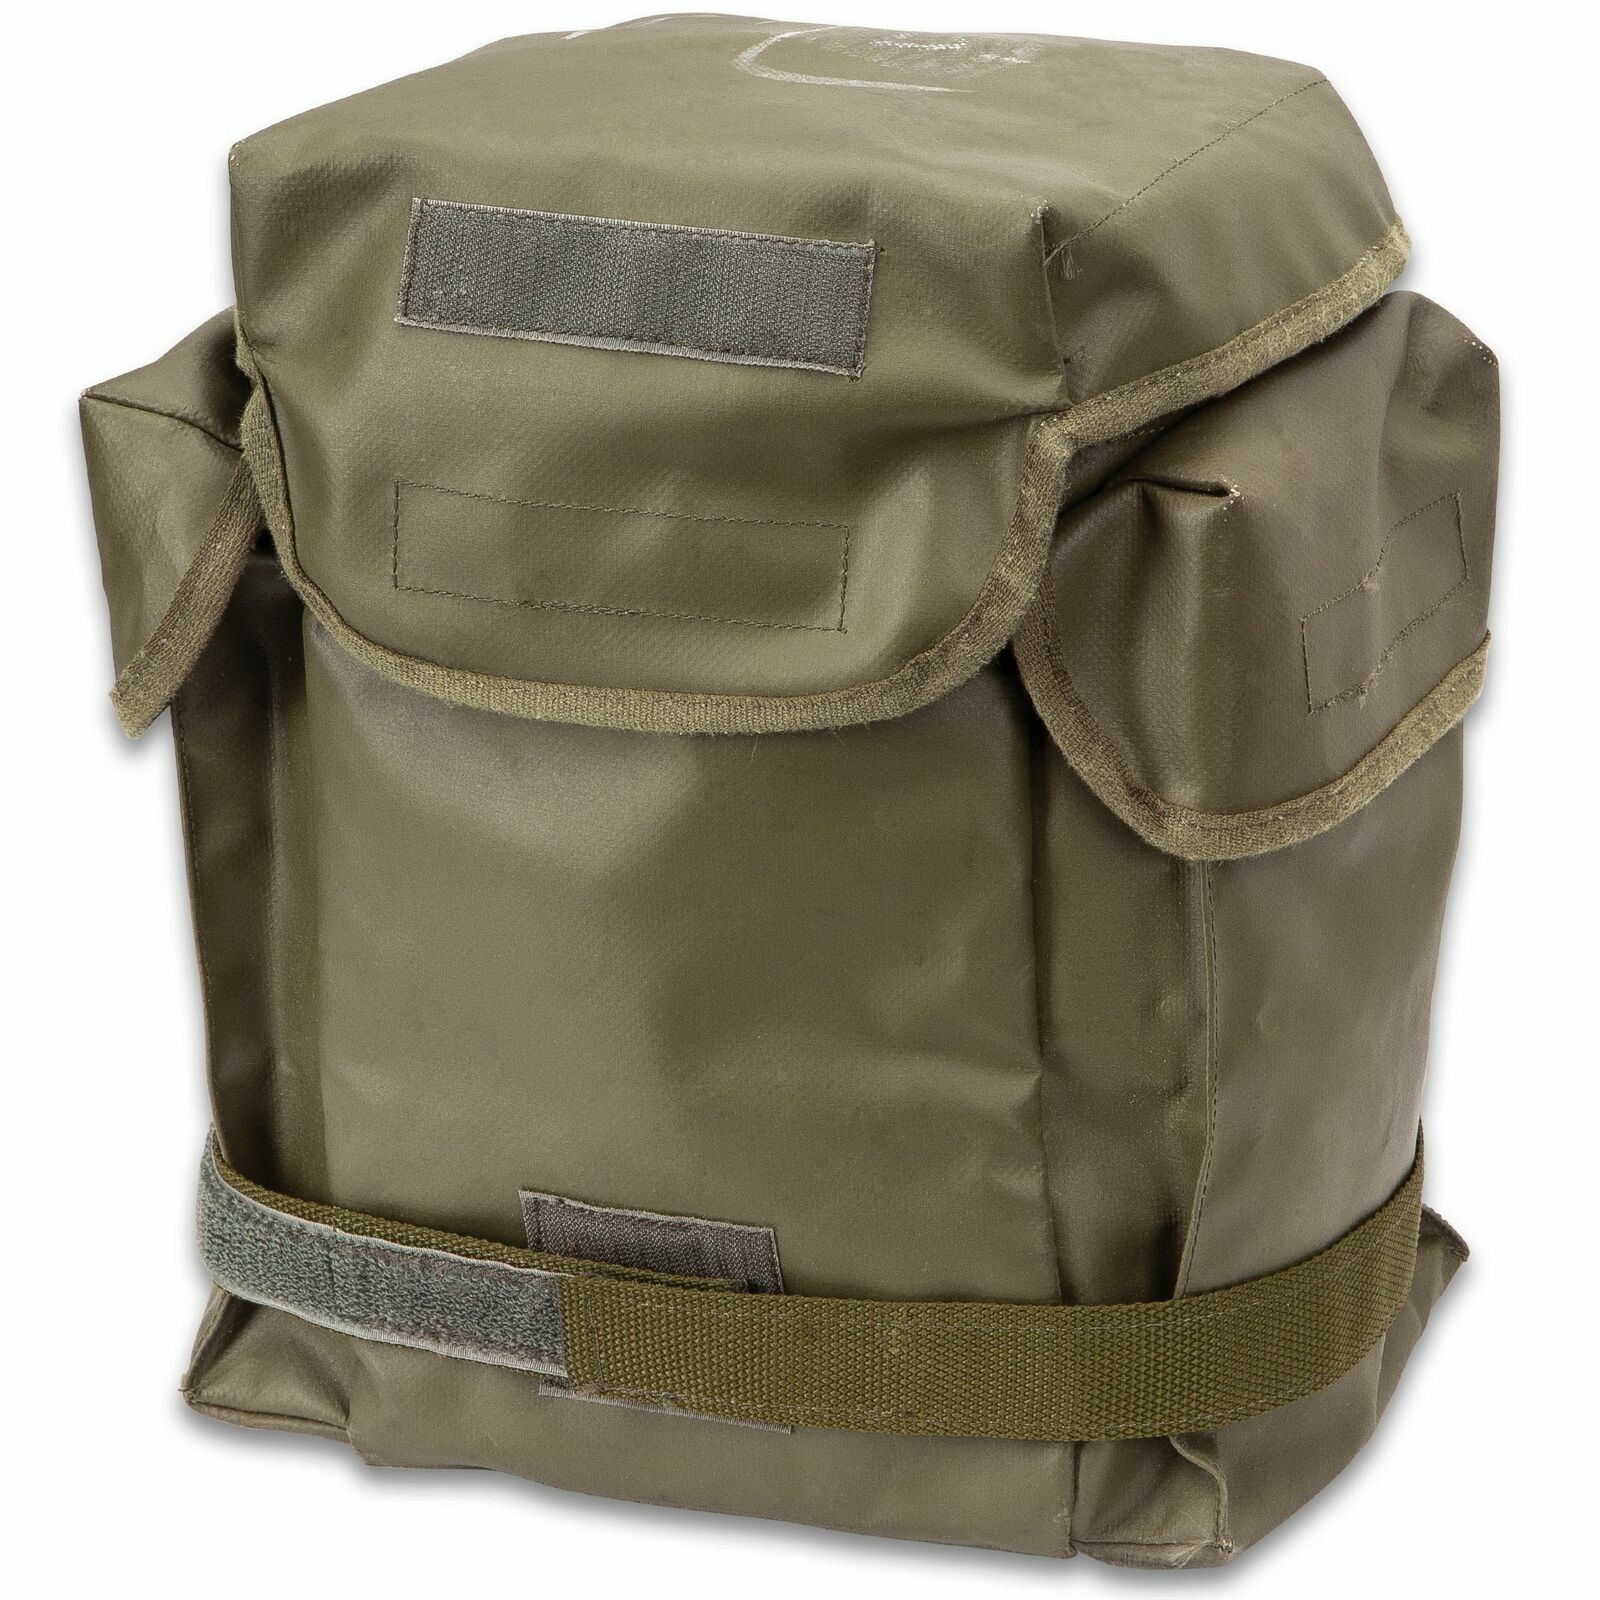 Waterproof Pannier Camera Bag Surplus Army First Aid Gear Gas Mask Bag Poland